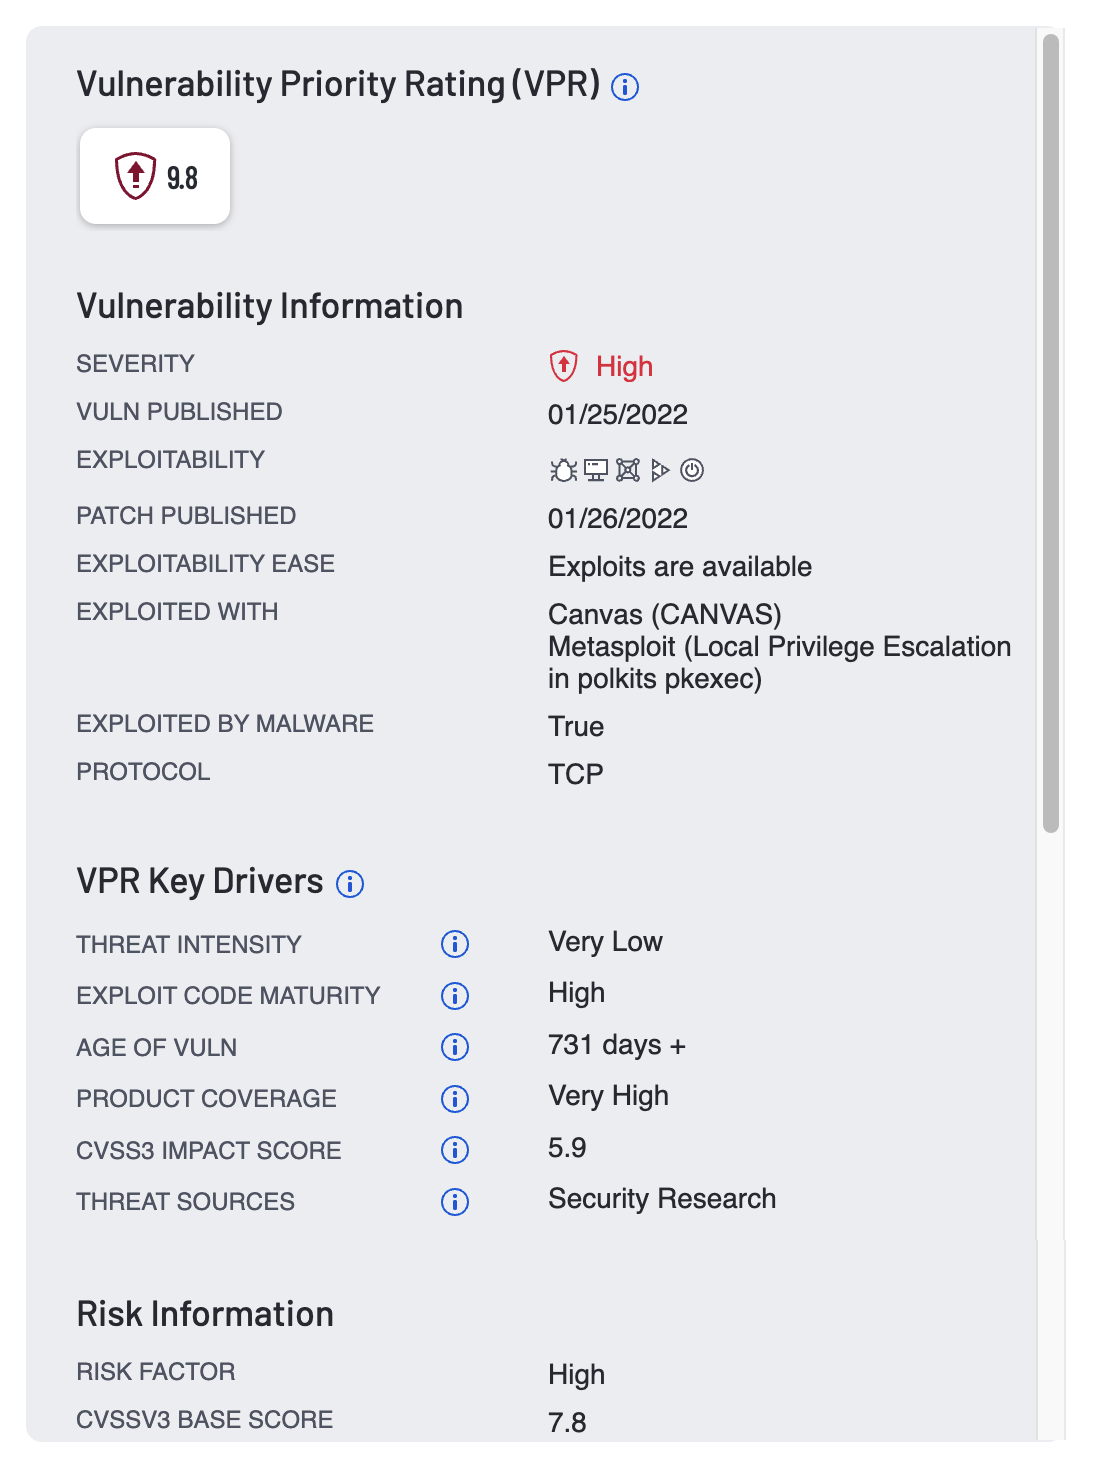 
Índice de Priorización de Vulnerabilidades (Vulnerability Priority Rating, VPR)
